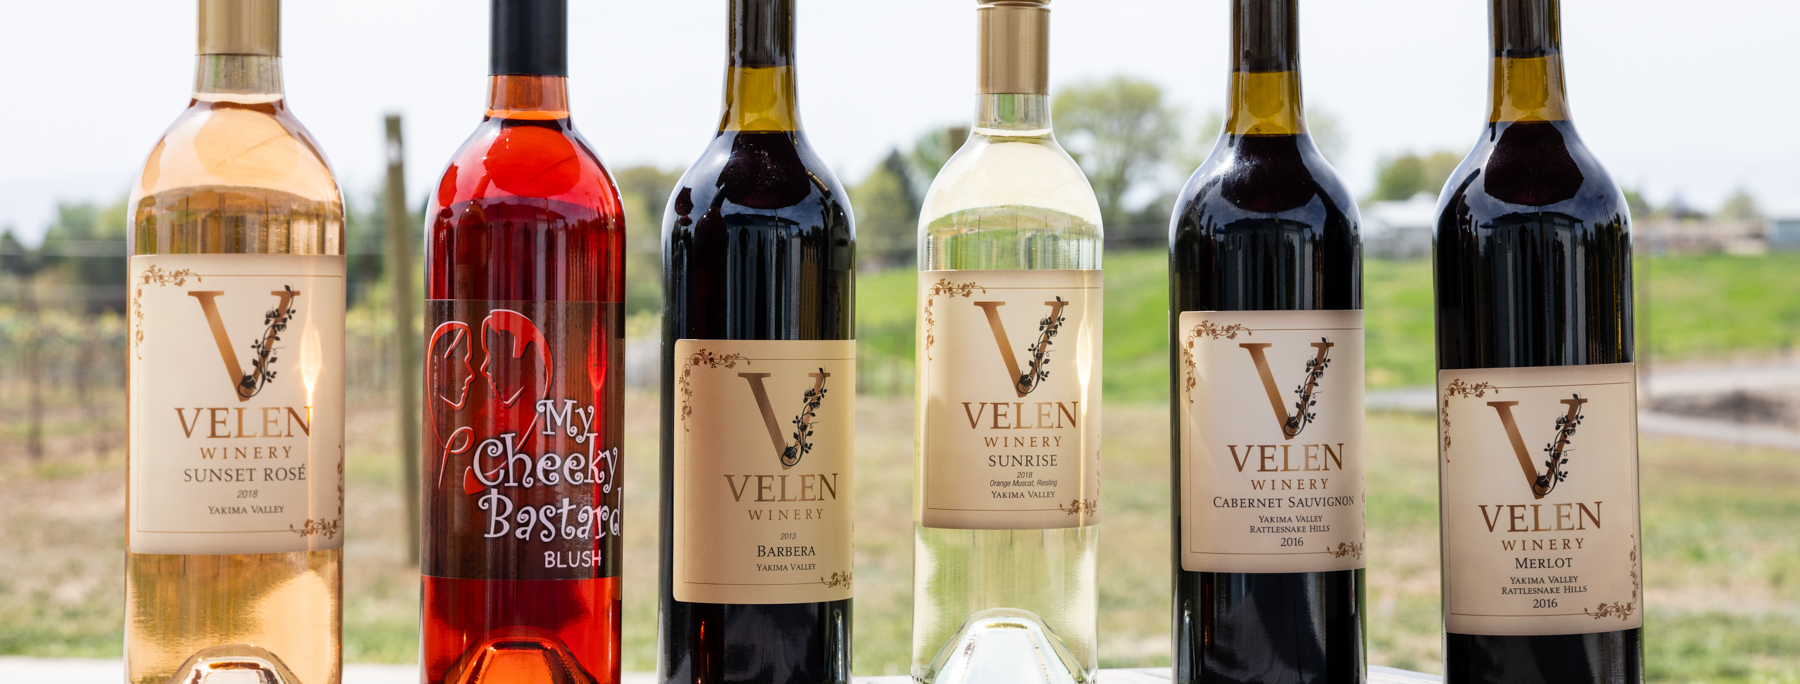 Velen Winery